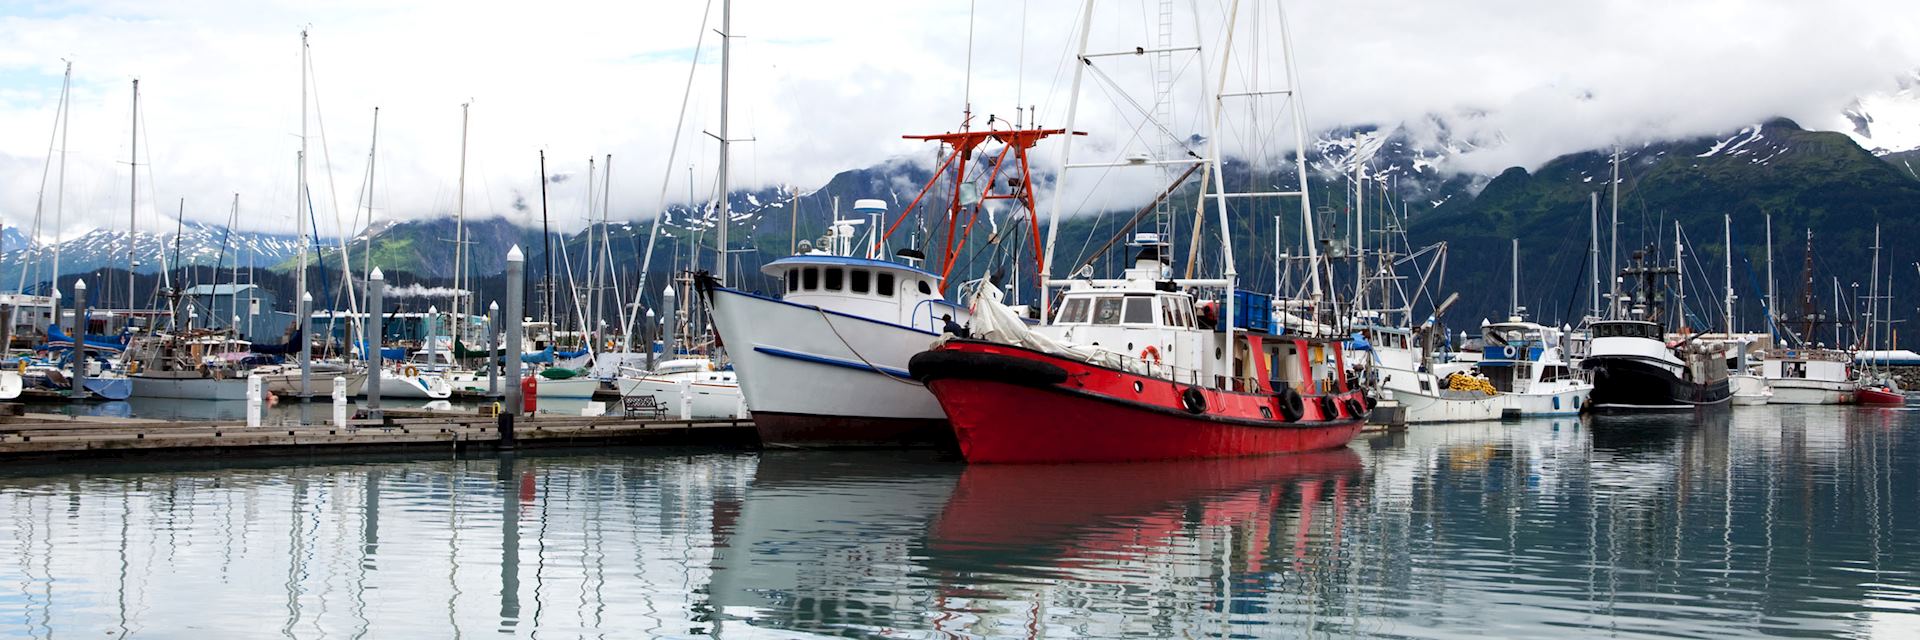 Fishing boats in Seward Harbor, Alaska